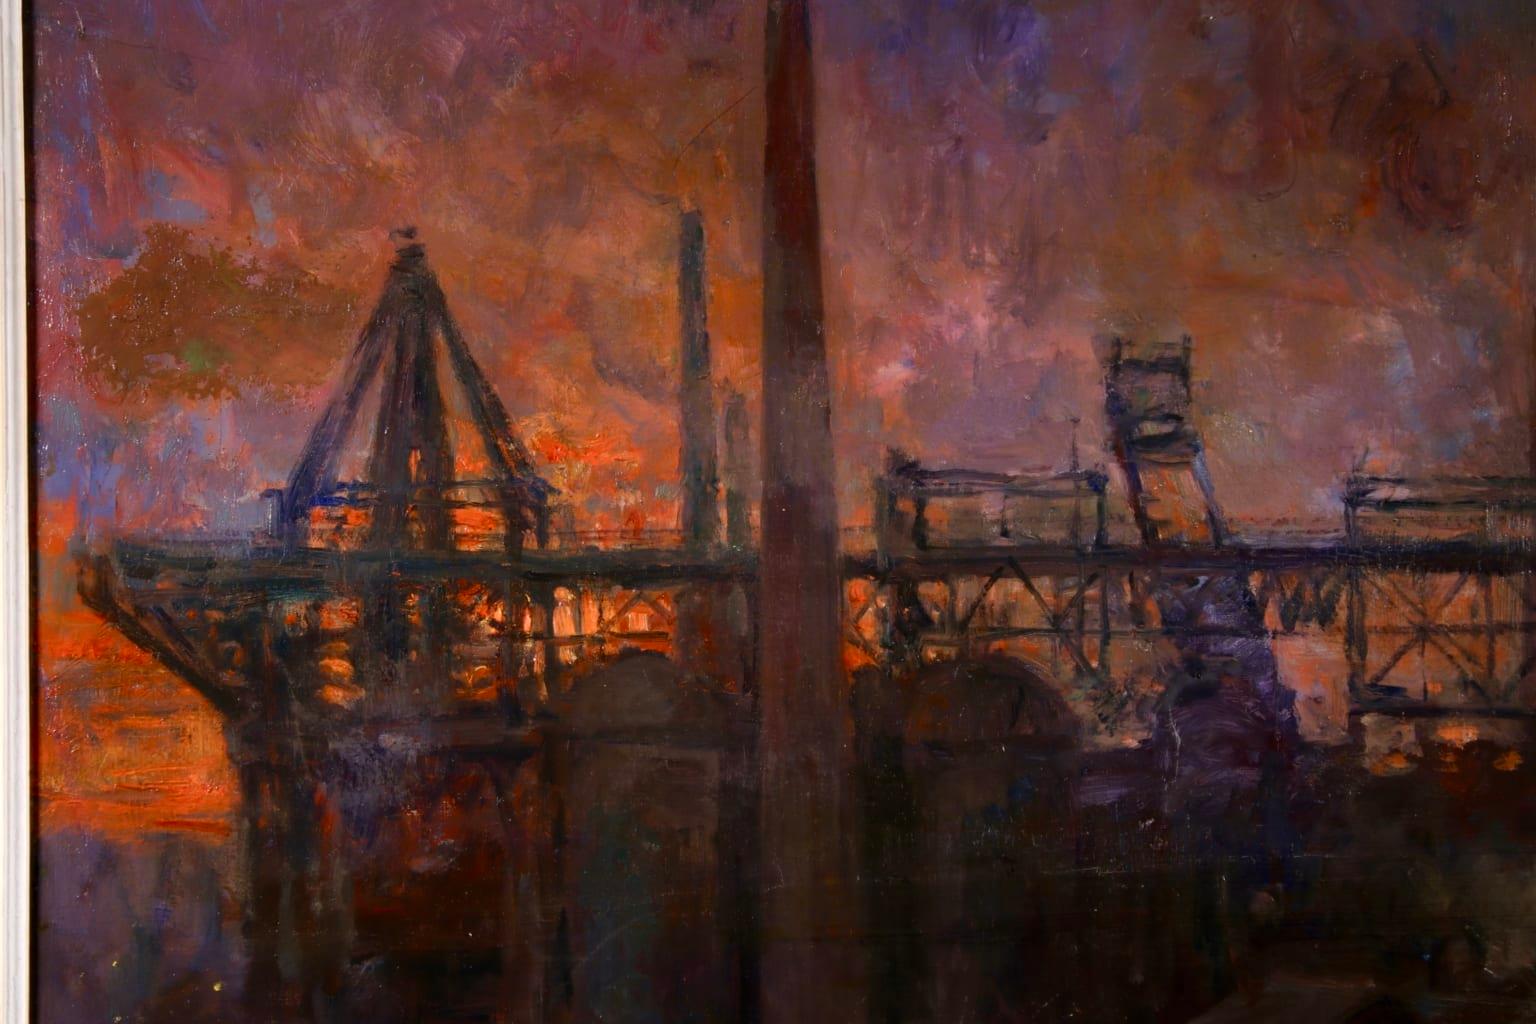 Blast Furnaces - Night - Realist Oil, Industrial Cityscape by Oswald Poreau 7